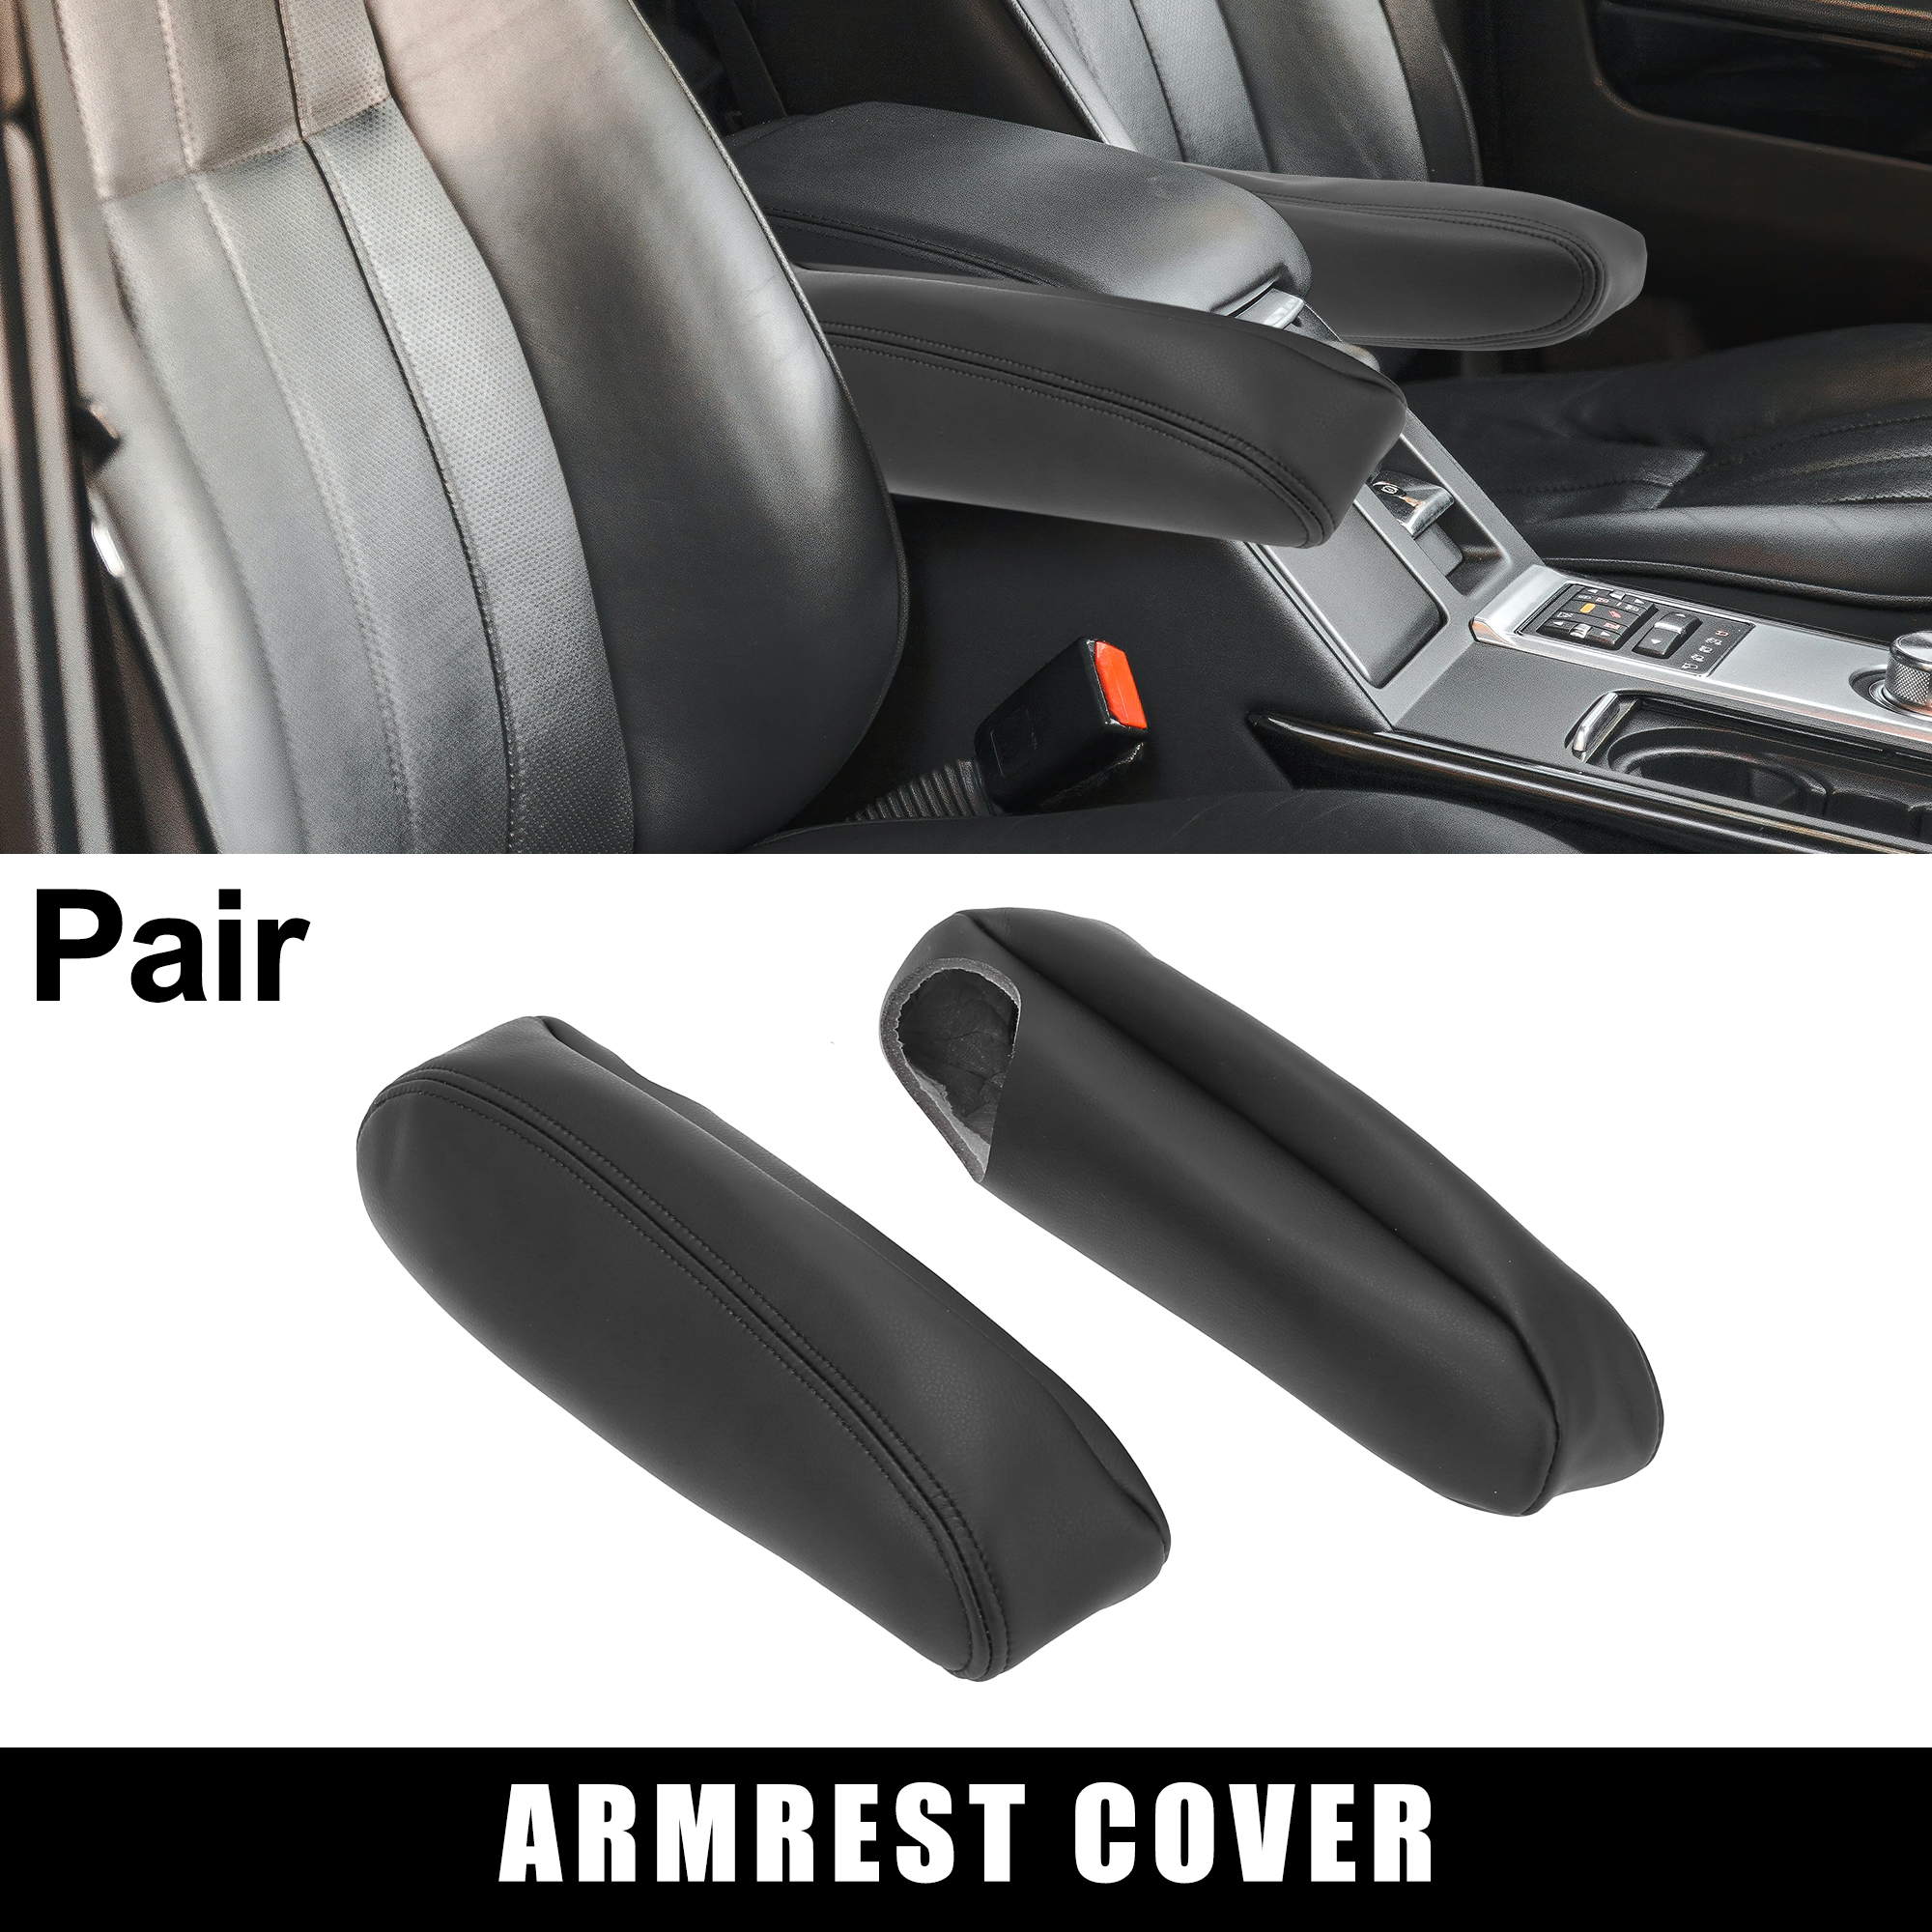 Unique Bargains Pair Car Front Seat Armrest Cover Microfiber Leather Black for Chevy Tahoe 00-06